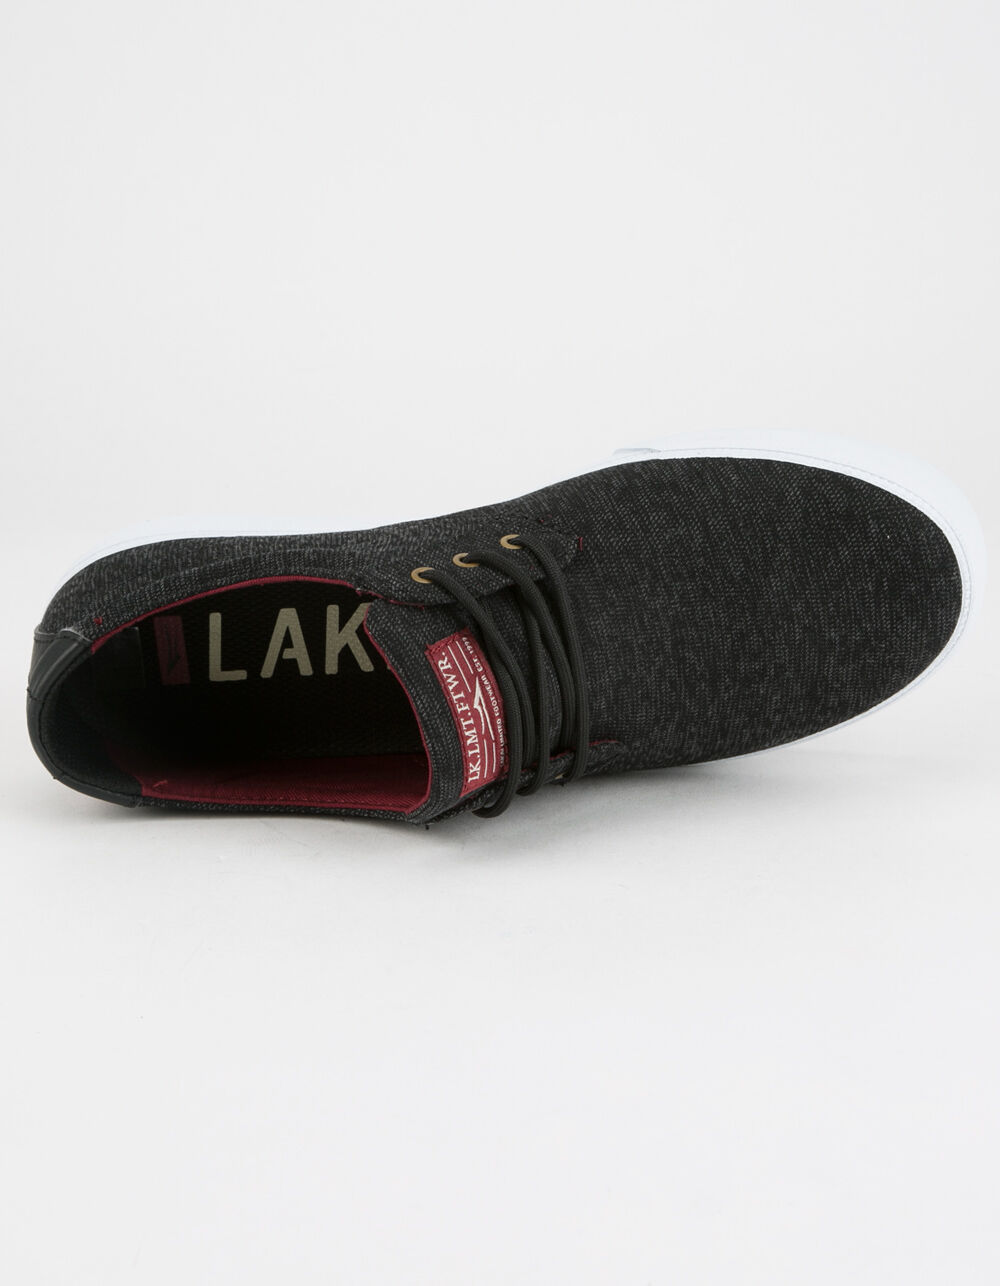 LAKAI Daly Black Mens Shoes image number 2